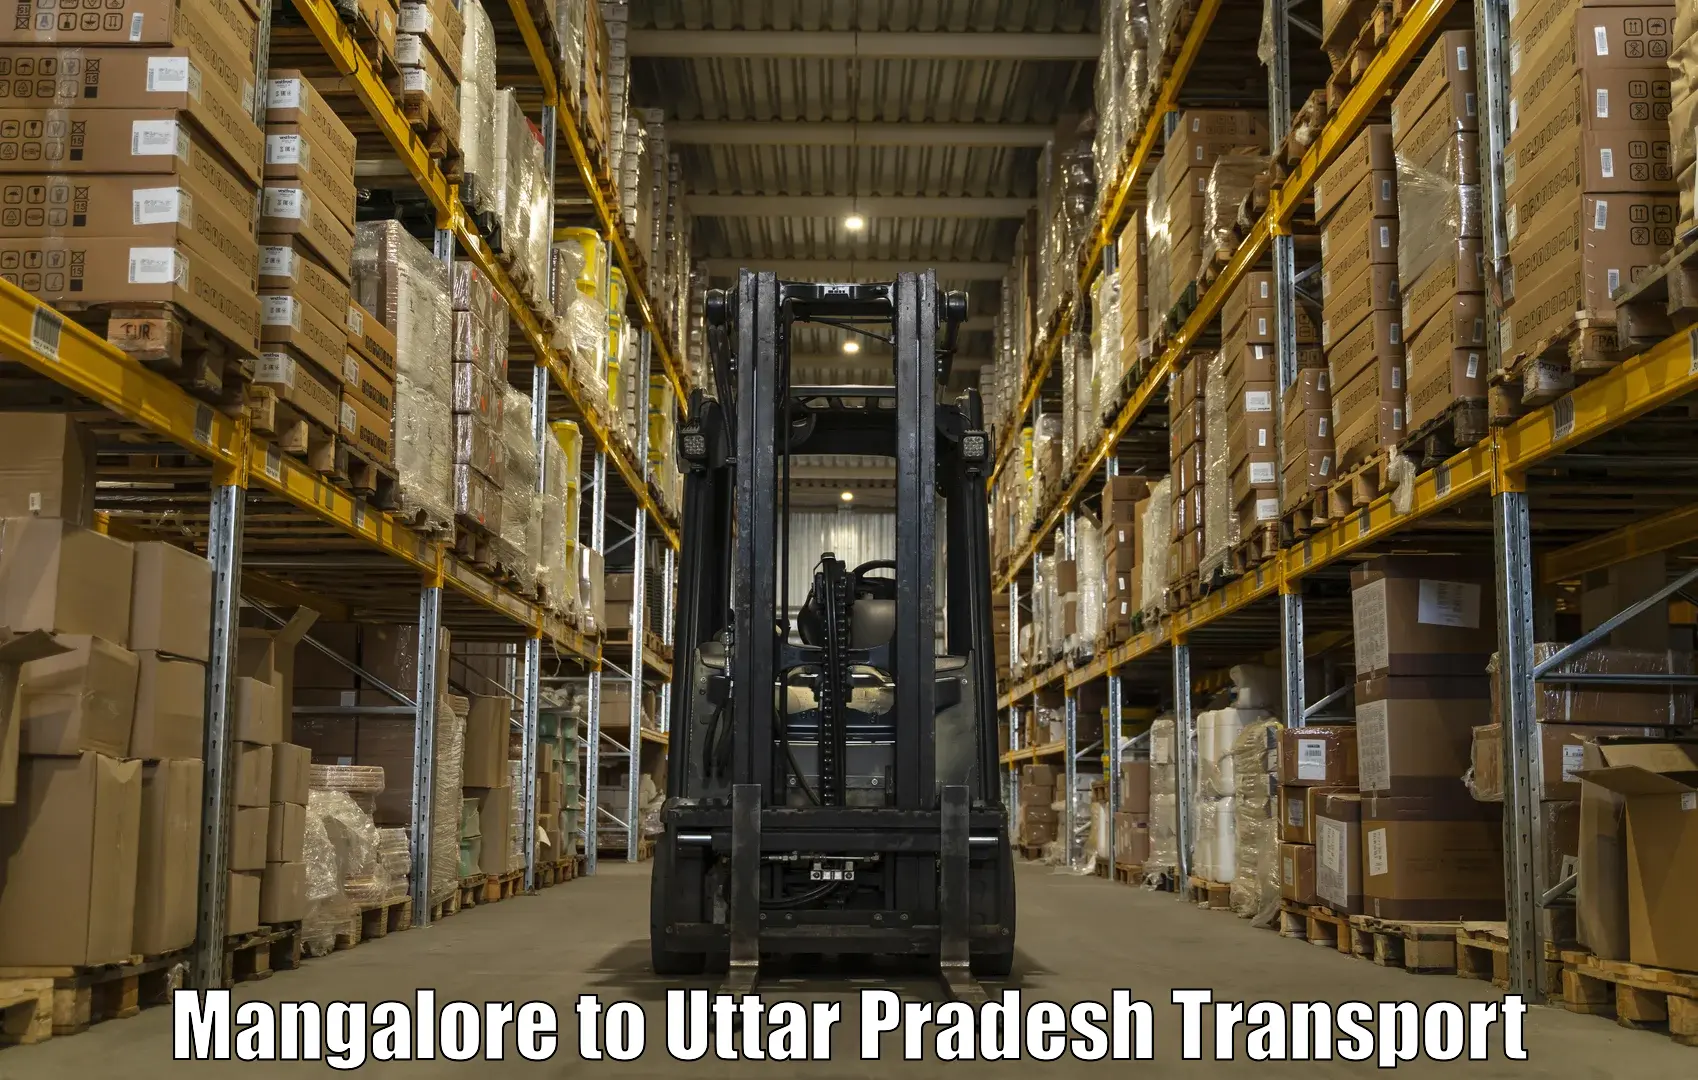 Truck transport companies in India Mangalore to Deoria